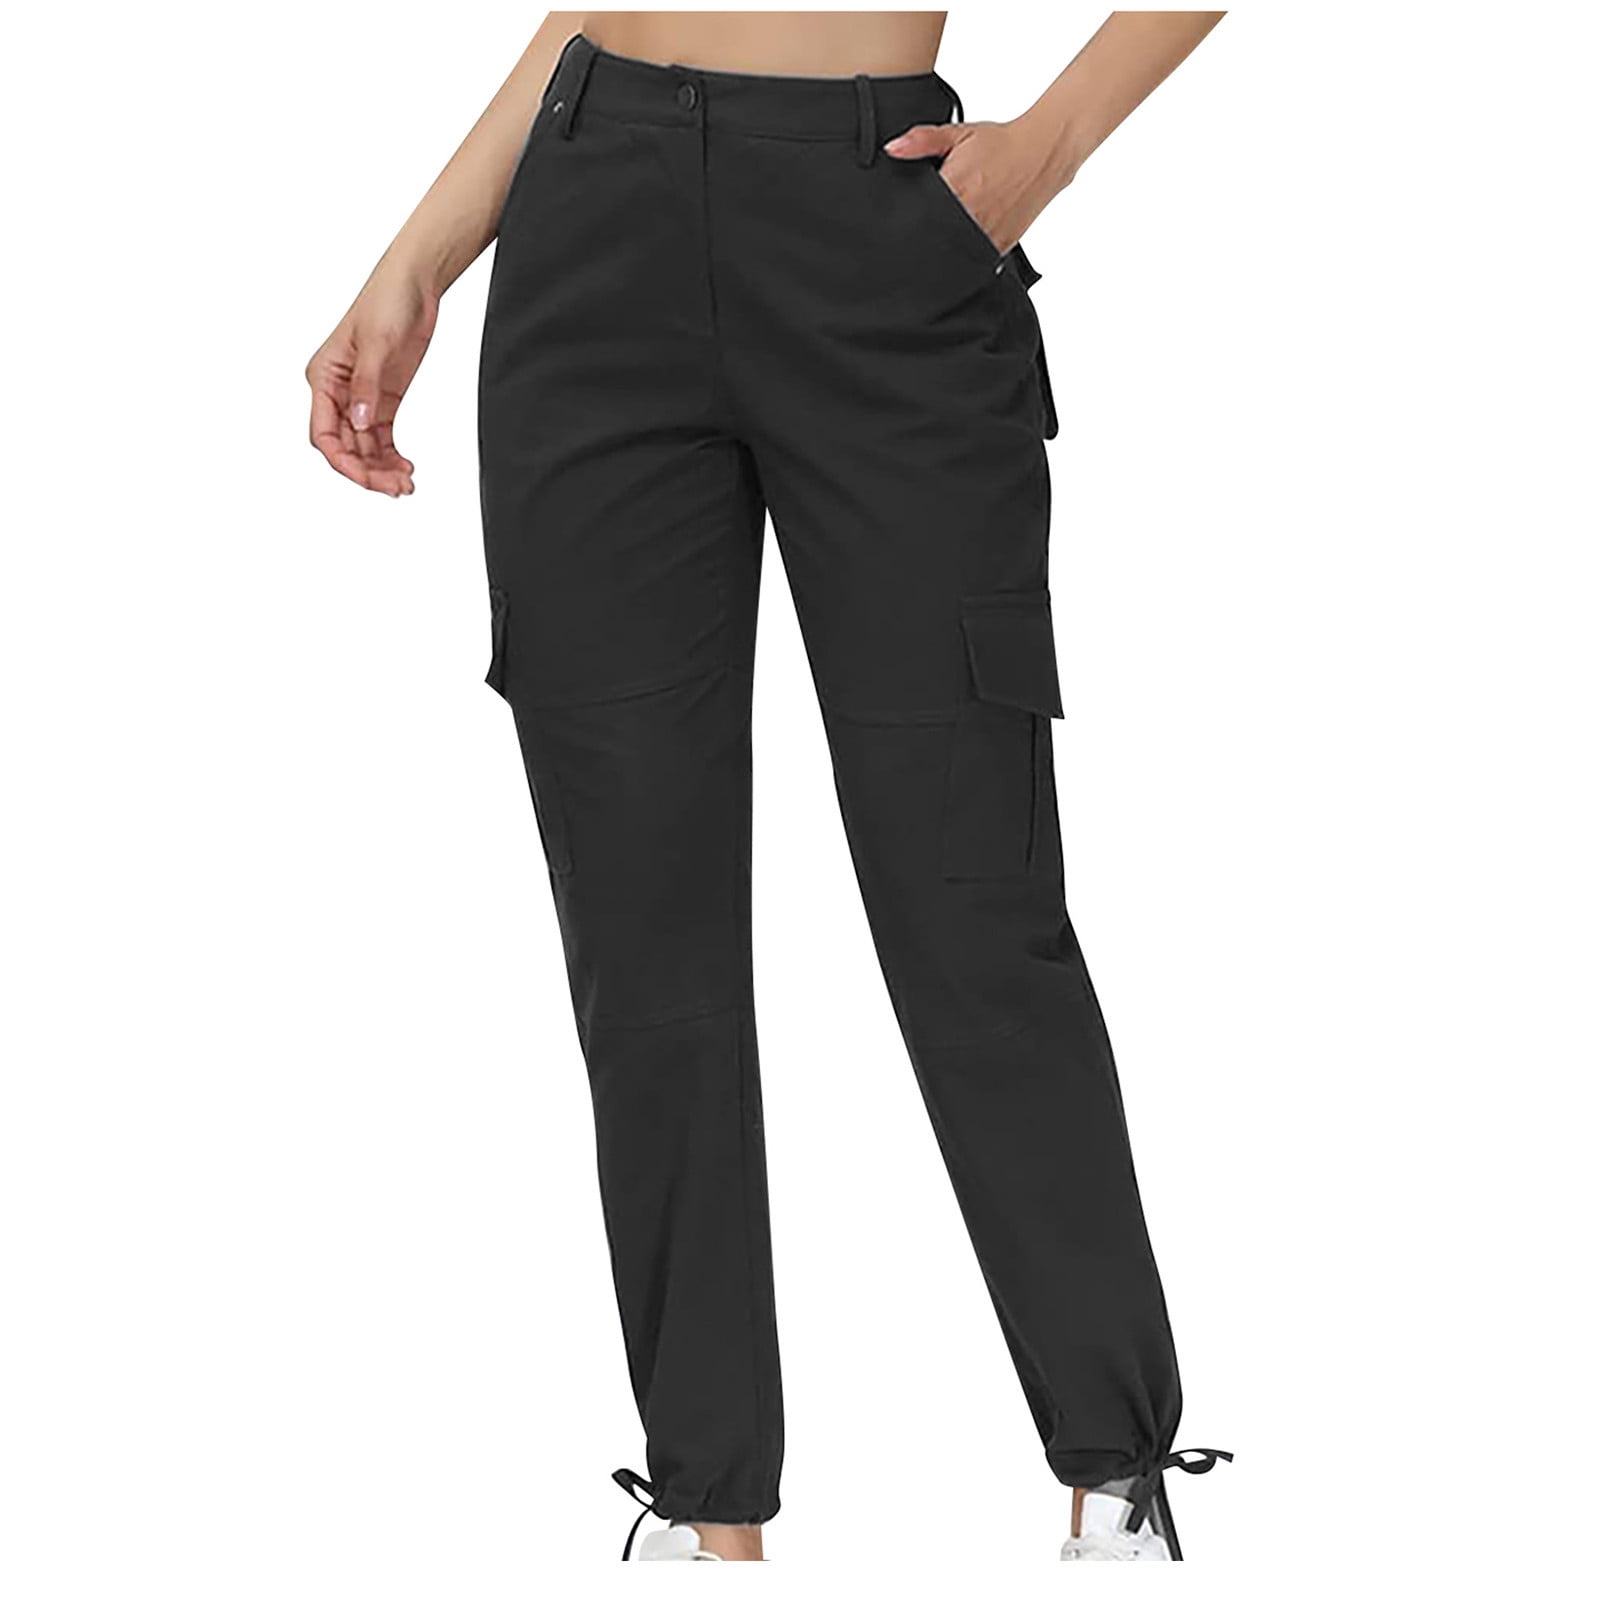 Mrat Baseball Pants Full Length Pants Fashion Women Summer Casual Loose Bandage Pocket Solid Trousers Zipper Pants Casual Pants For Ladies Black M 